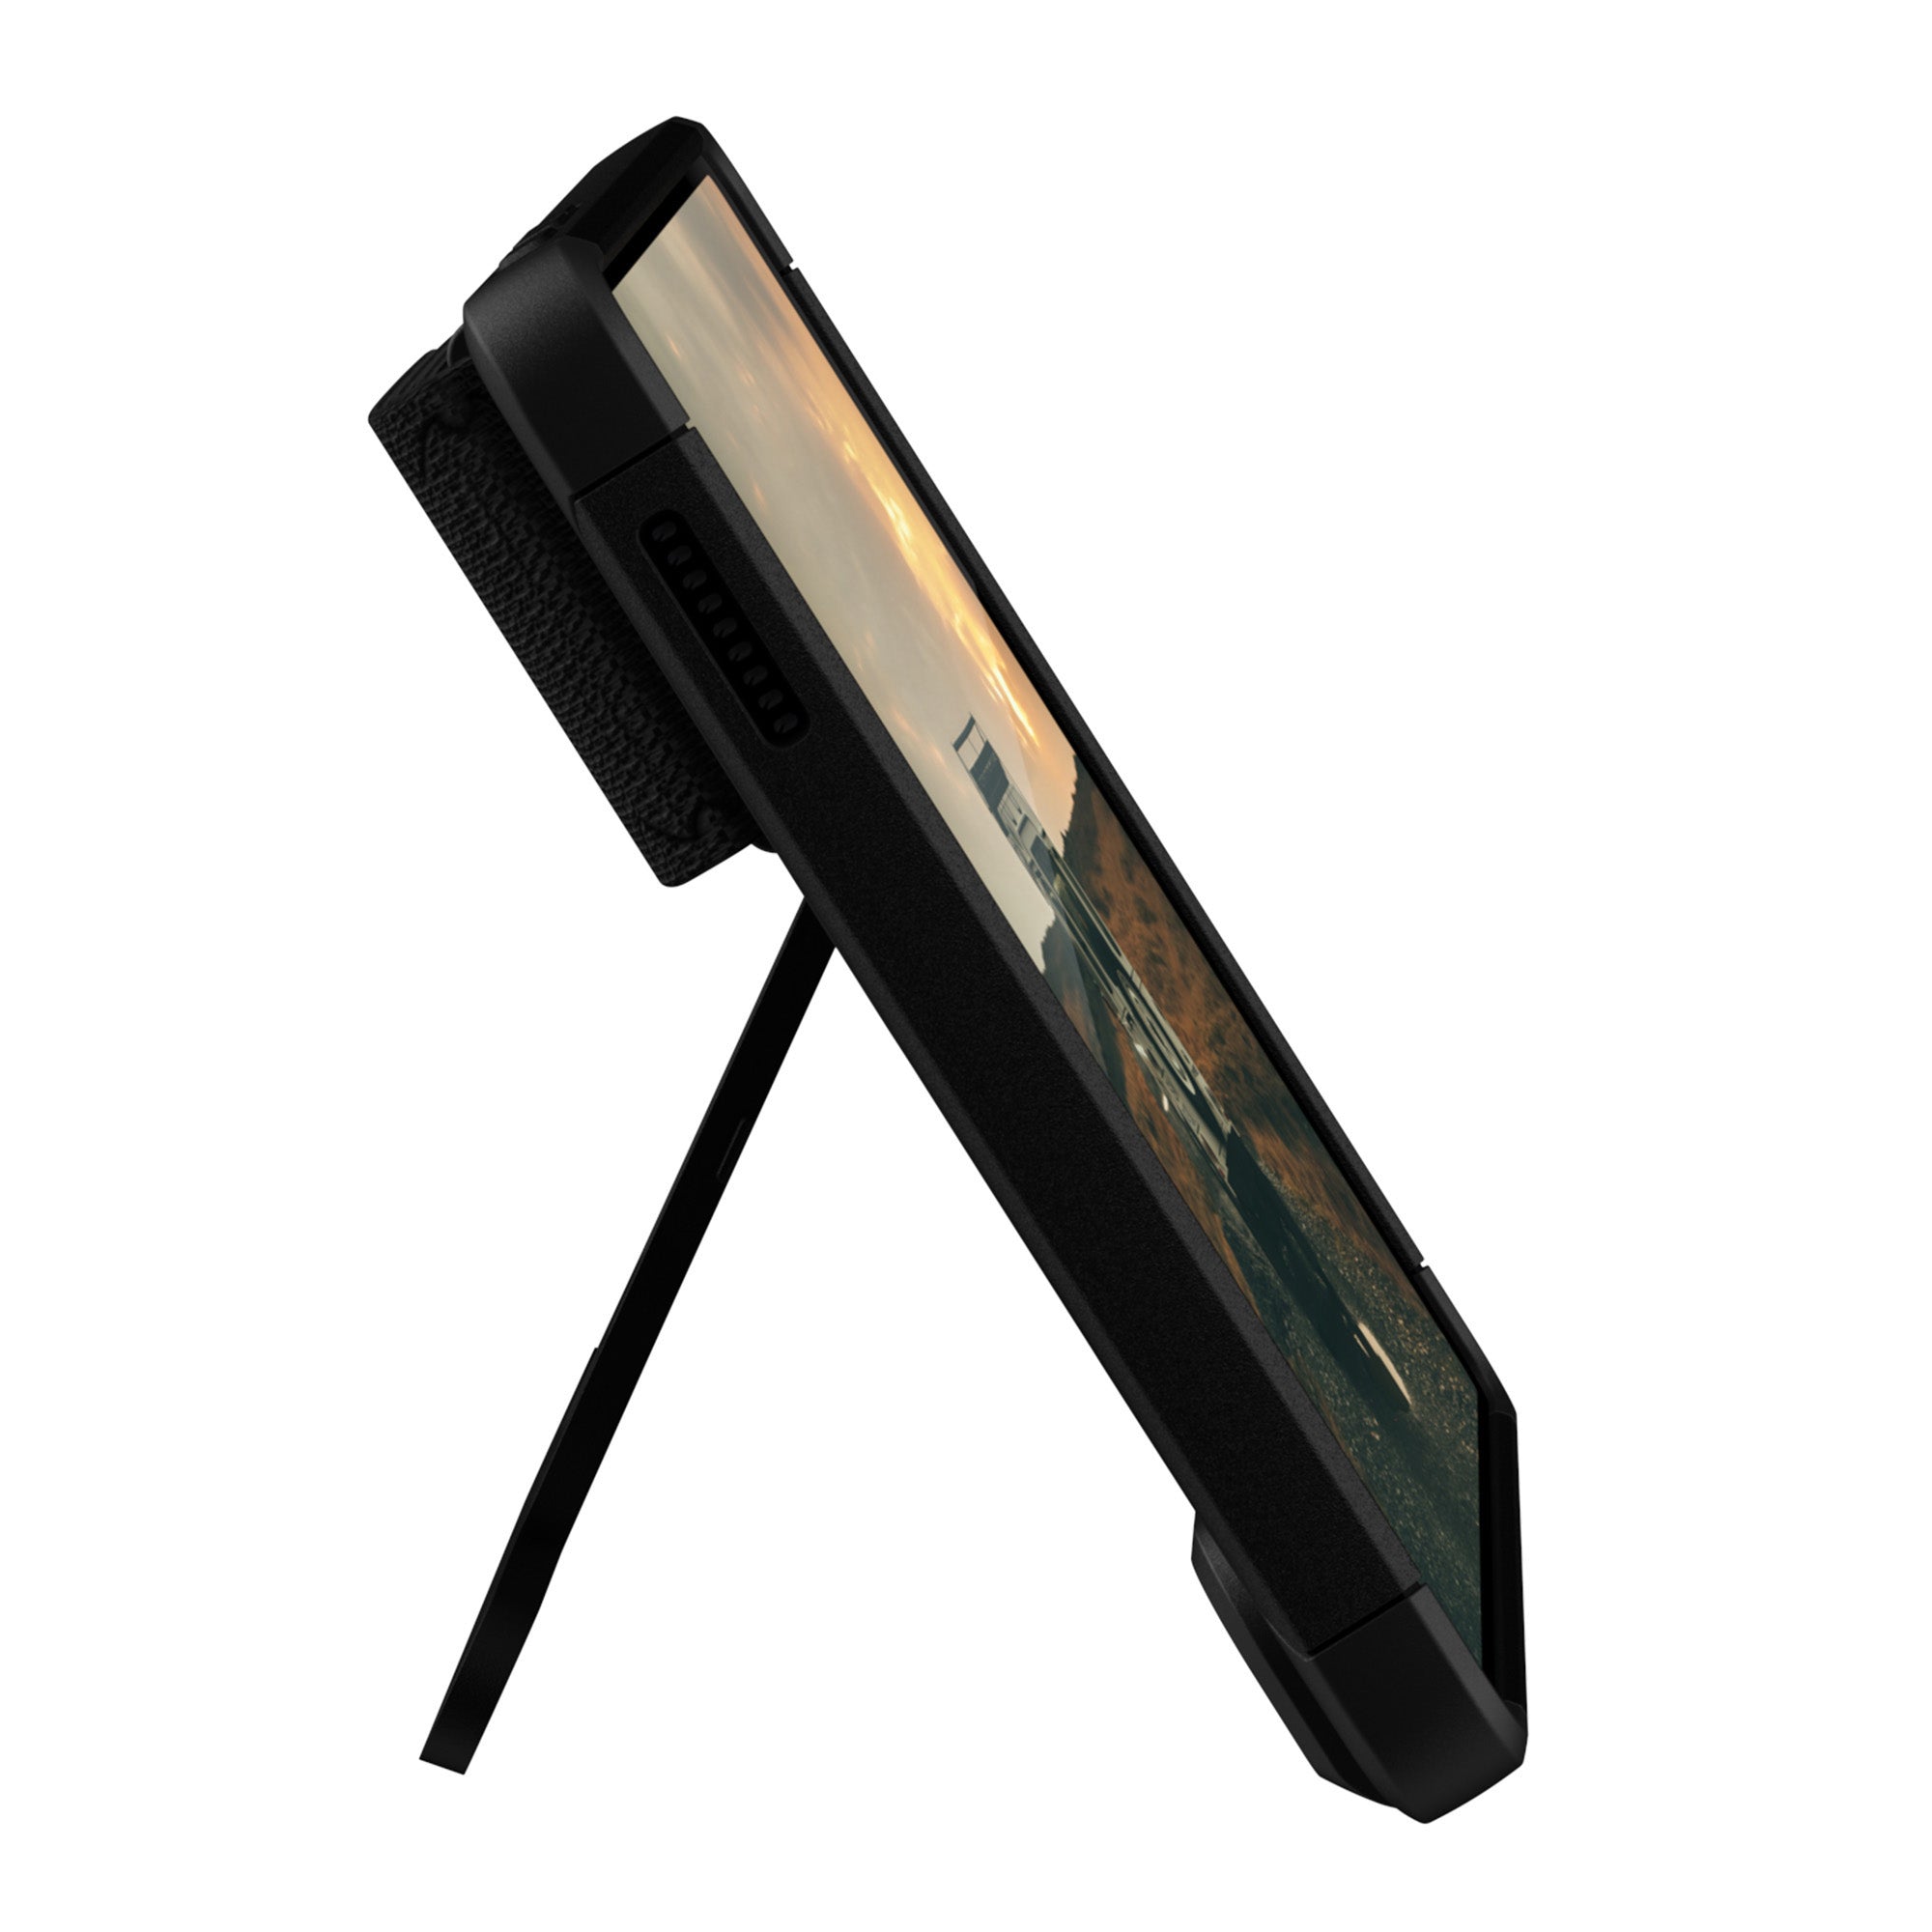 Samsung Galaxy Tab A7 Lite UAG Scout w/Kickstand and Handstrap Series Case - Black - 15-09381